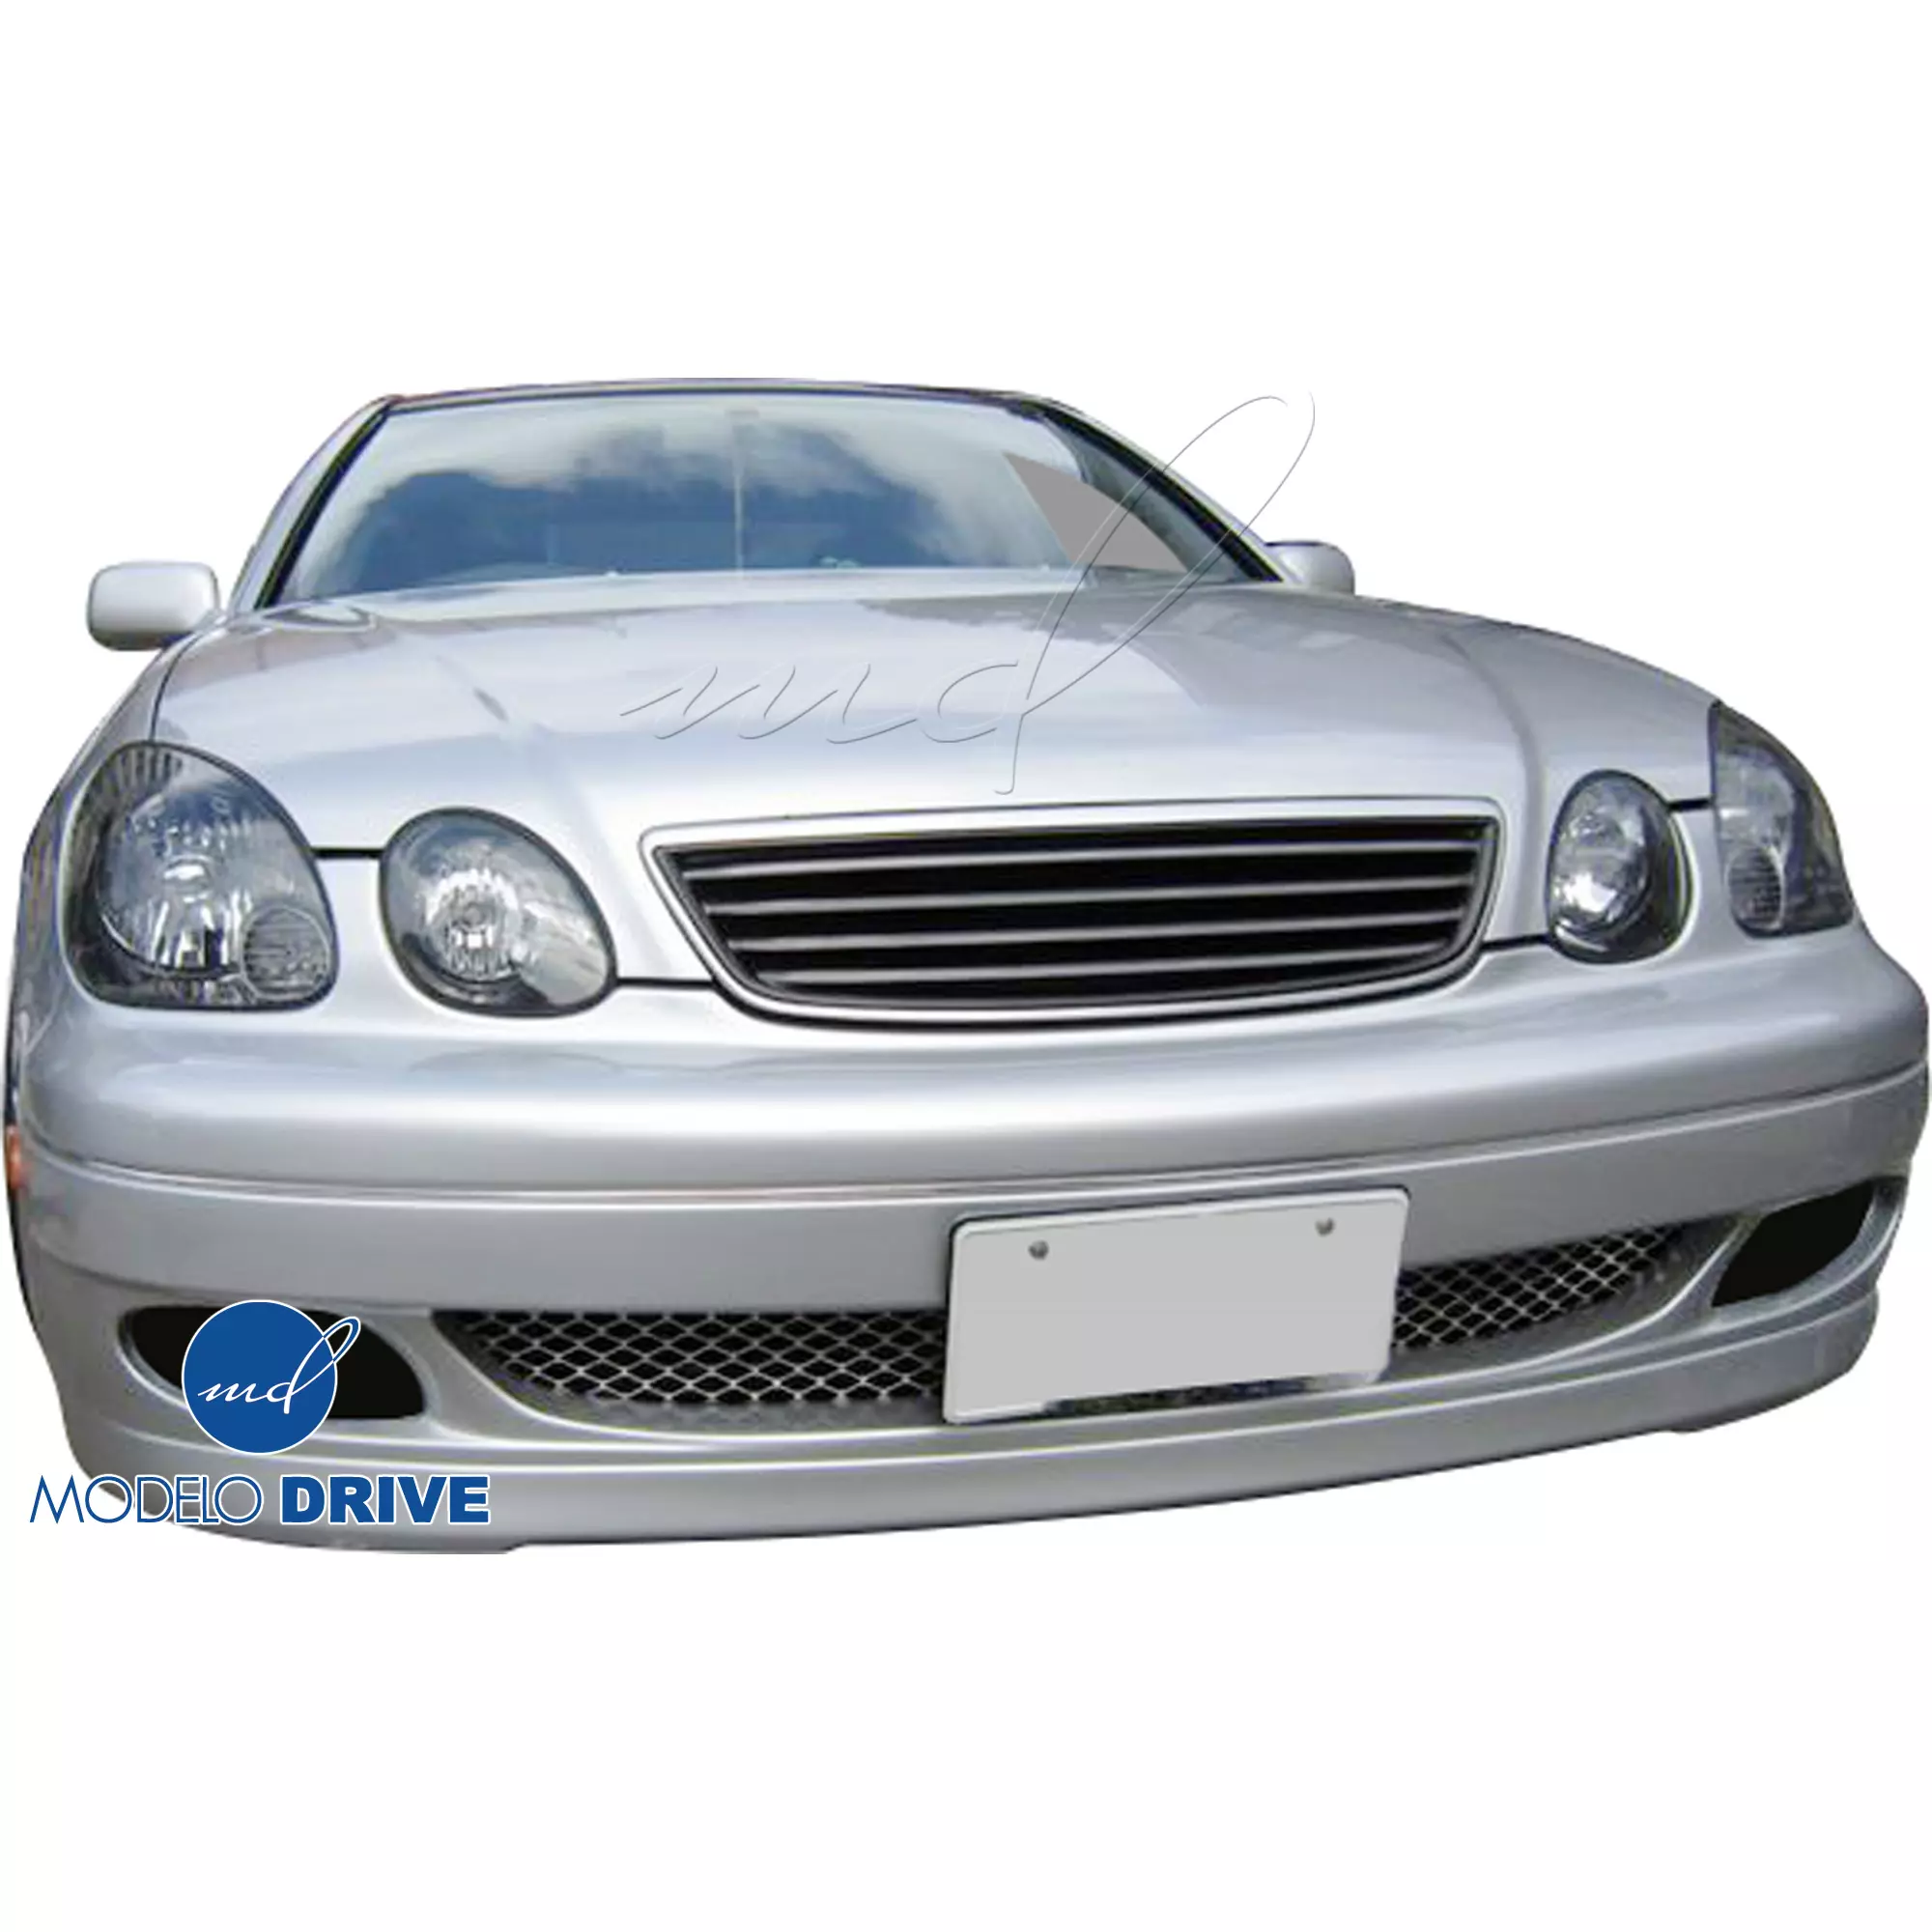 ModeloDrive FRP JUNT Body Kit 4pc > Lexus GS Series GS400 GS300 1998-2005 - Image 4